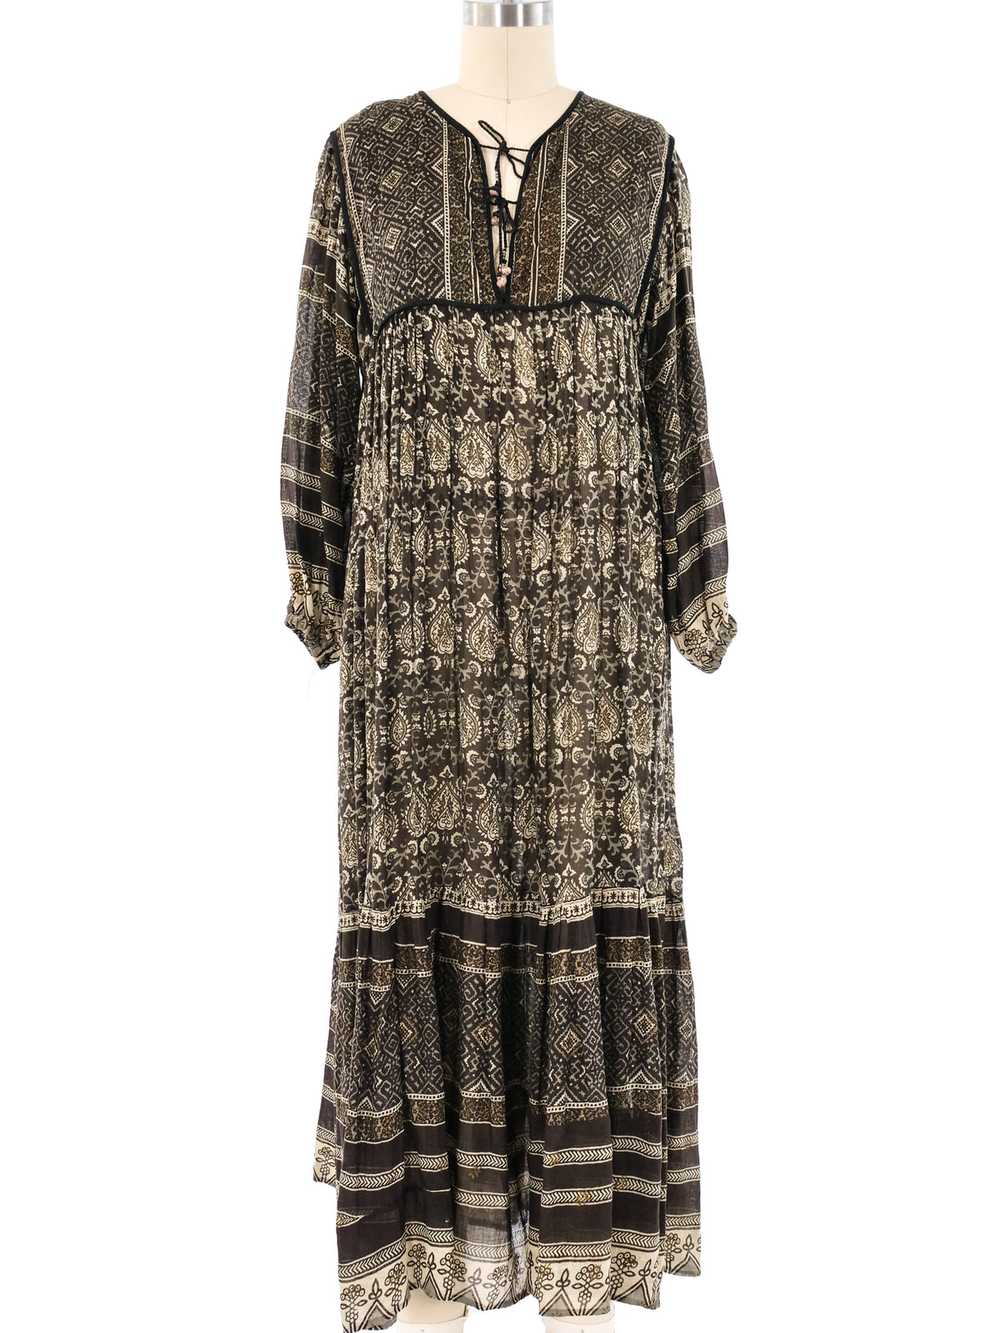 Paisley Block Printed Indian Dress - image 1